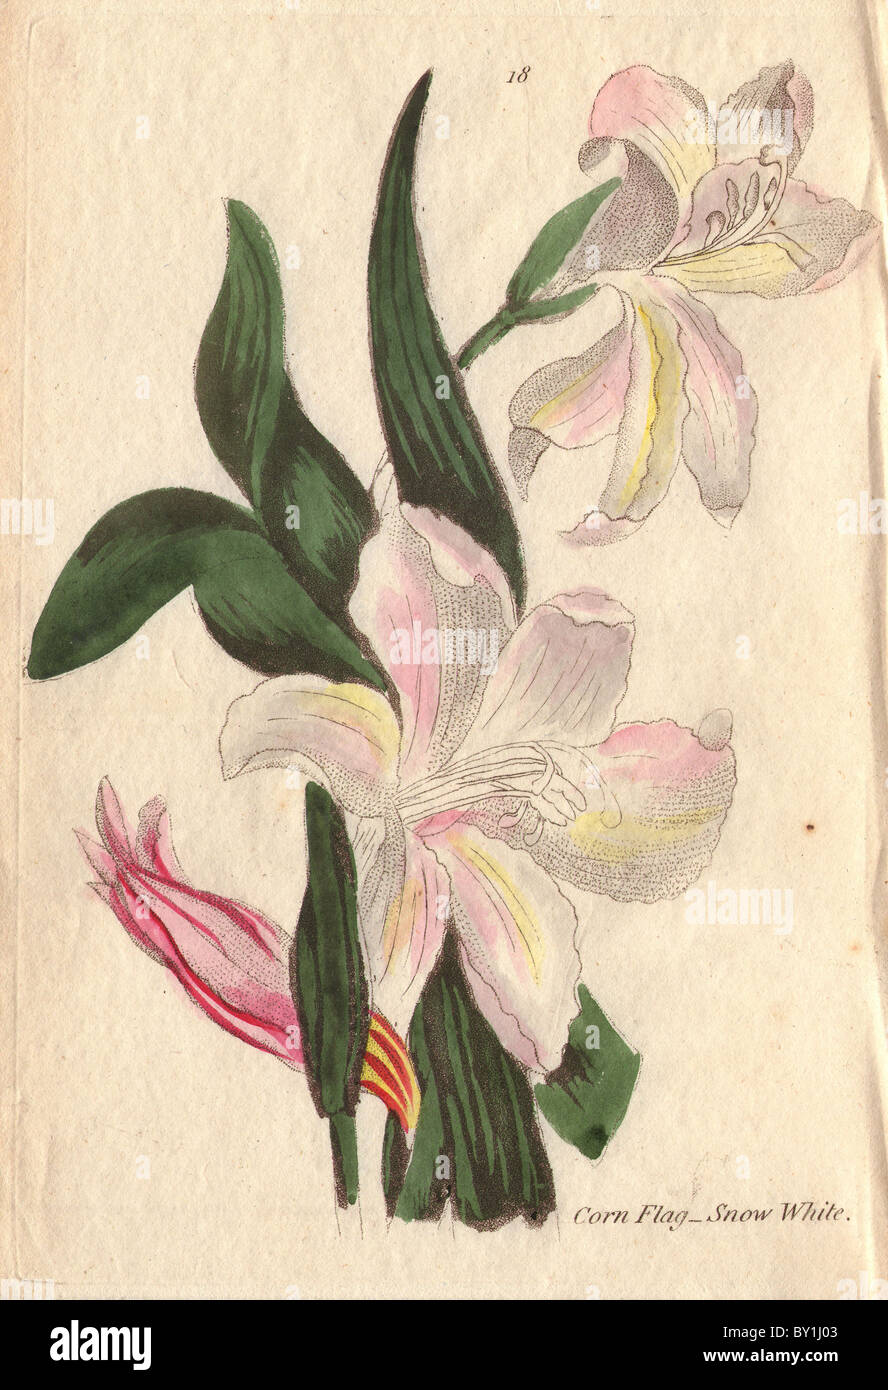 Snow-white cornflag, Gladiolus blandus (var. B), Stock Photo